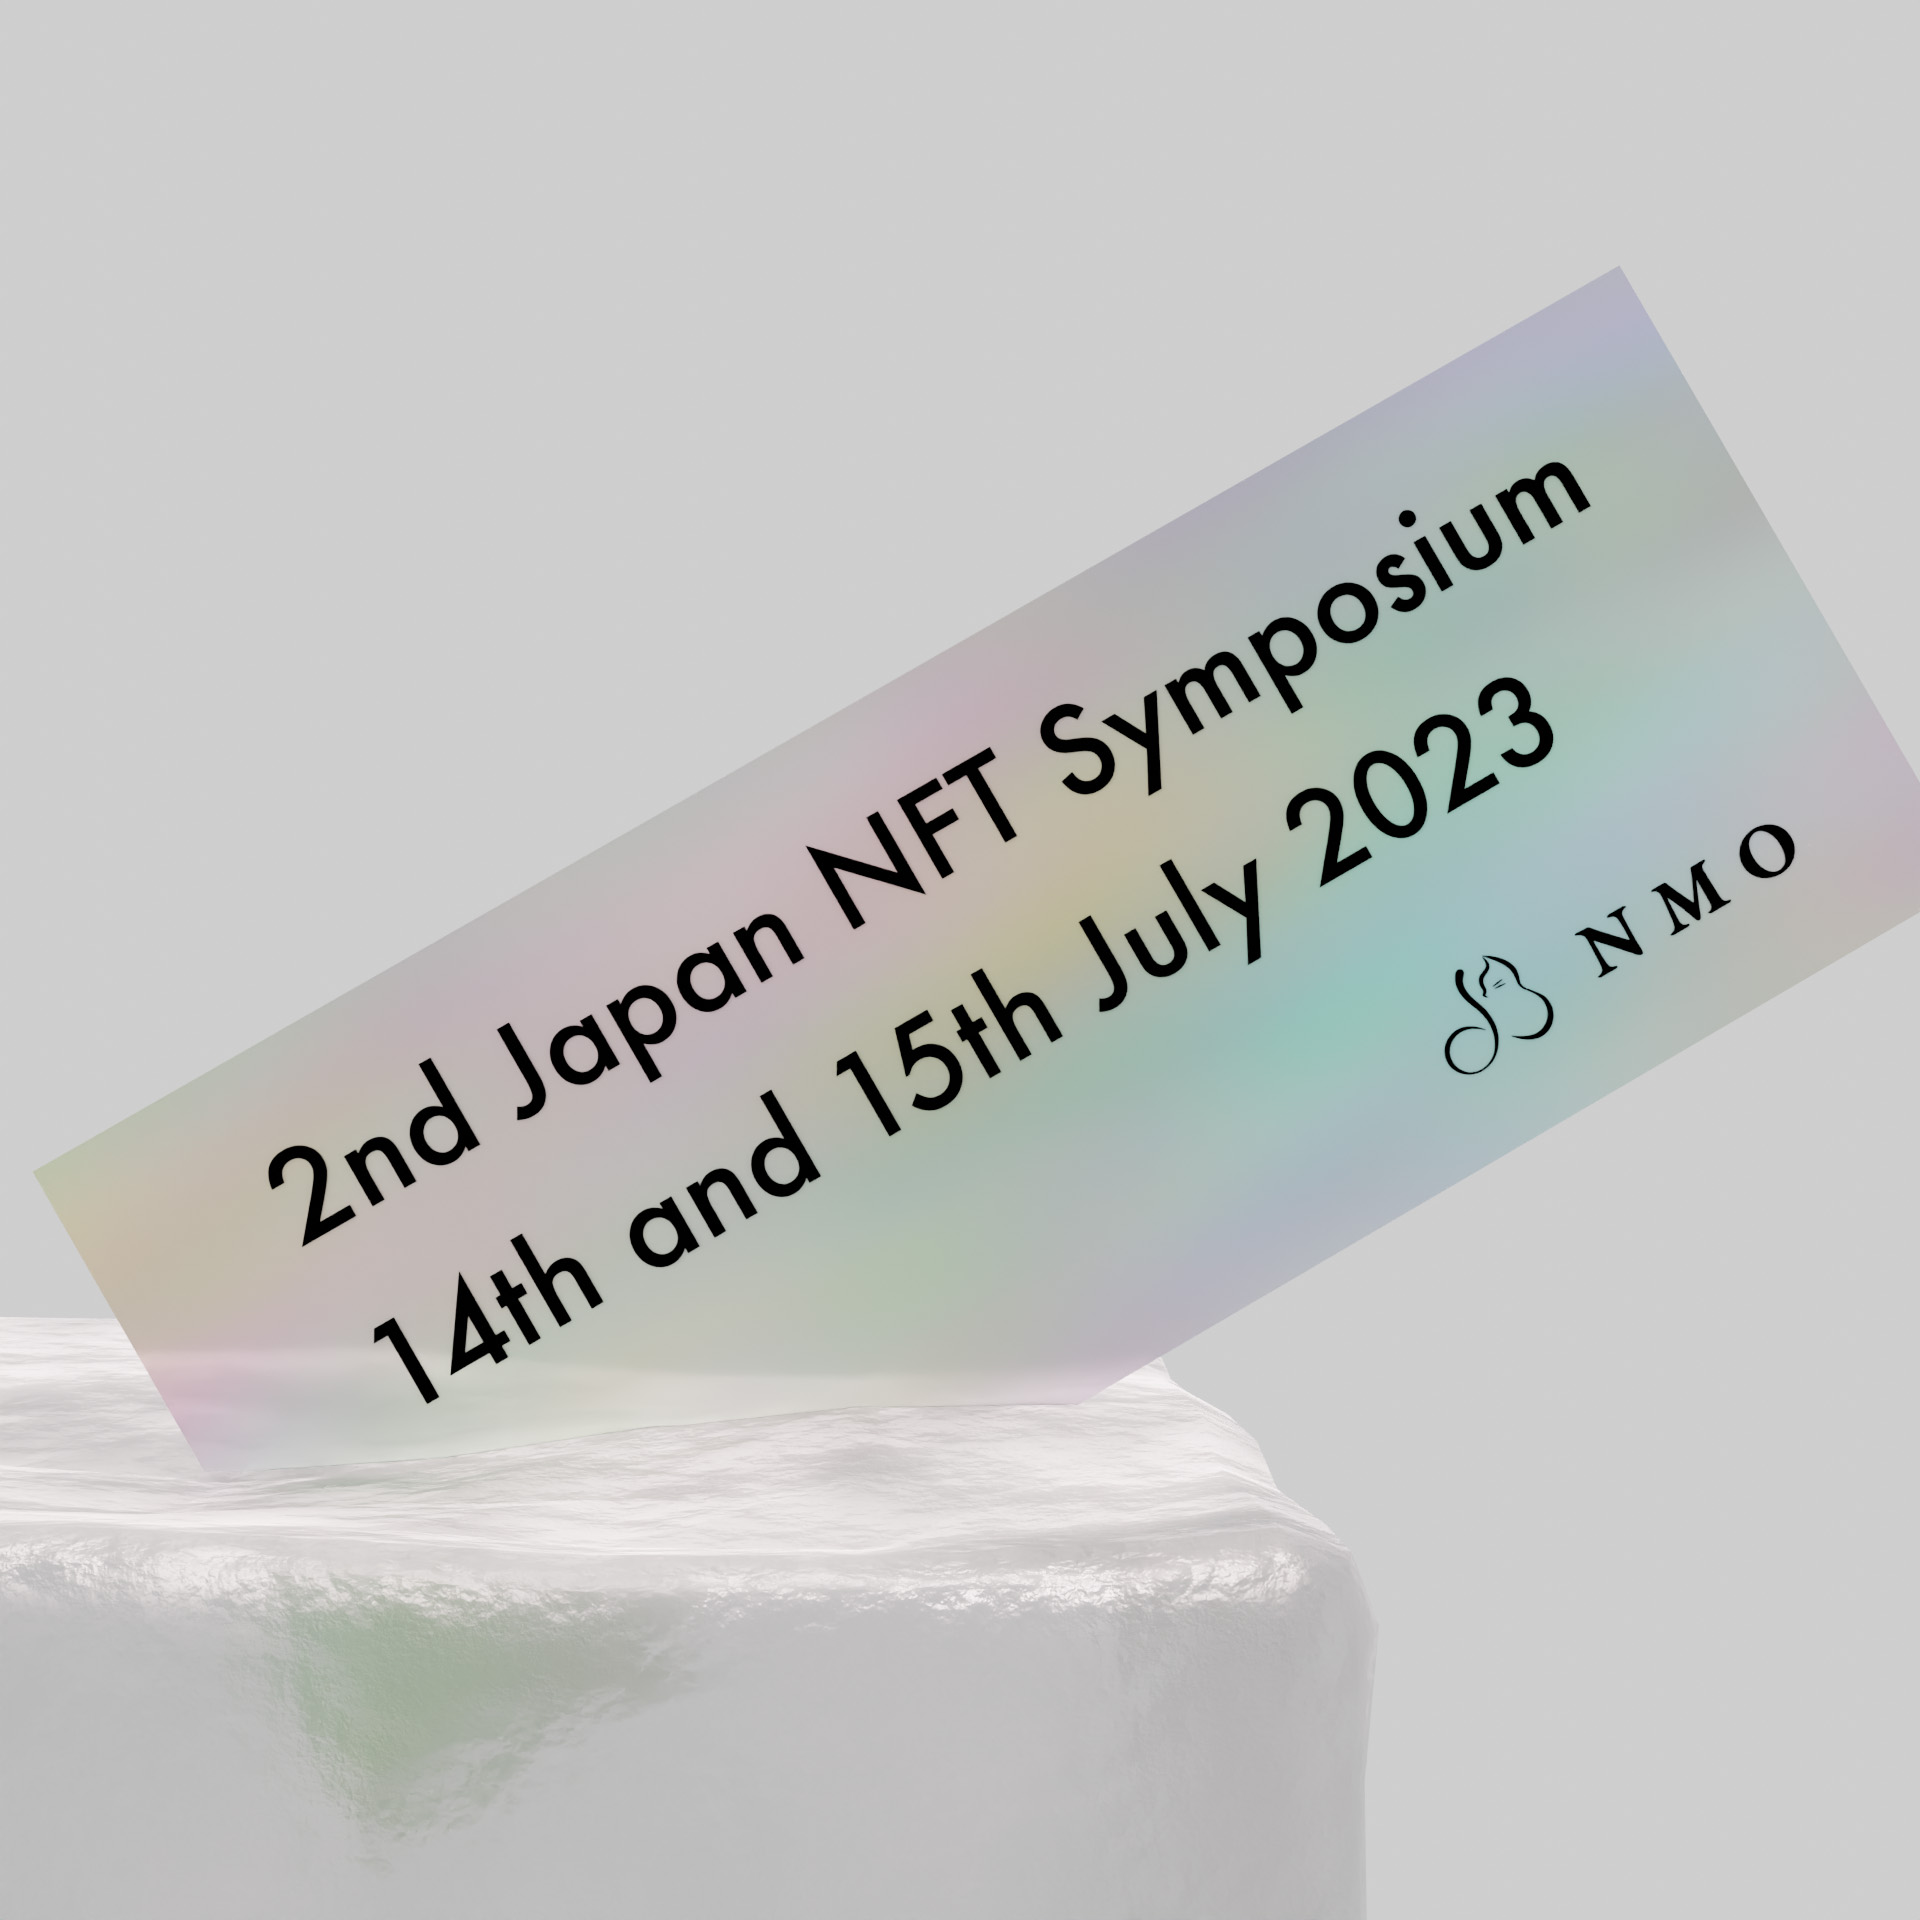 2nd Japan NFT Symposium on 2023/07/14-15